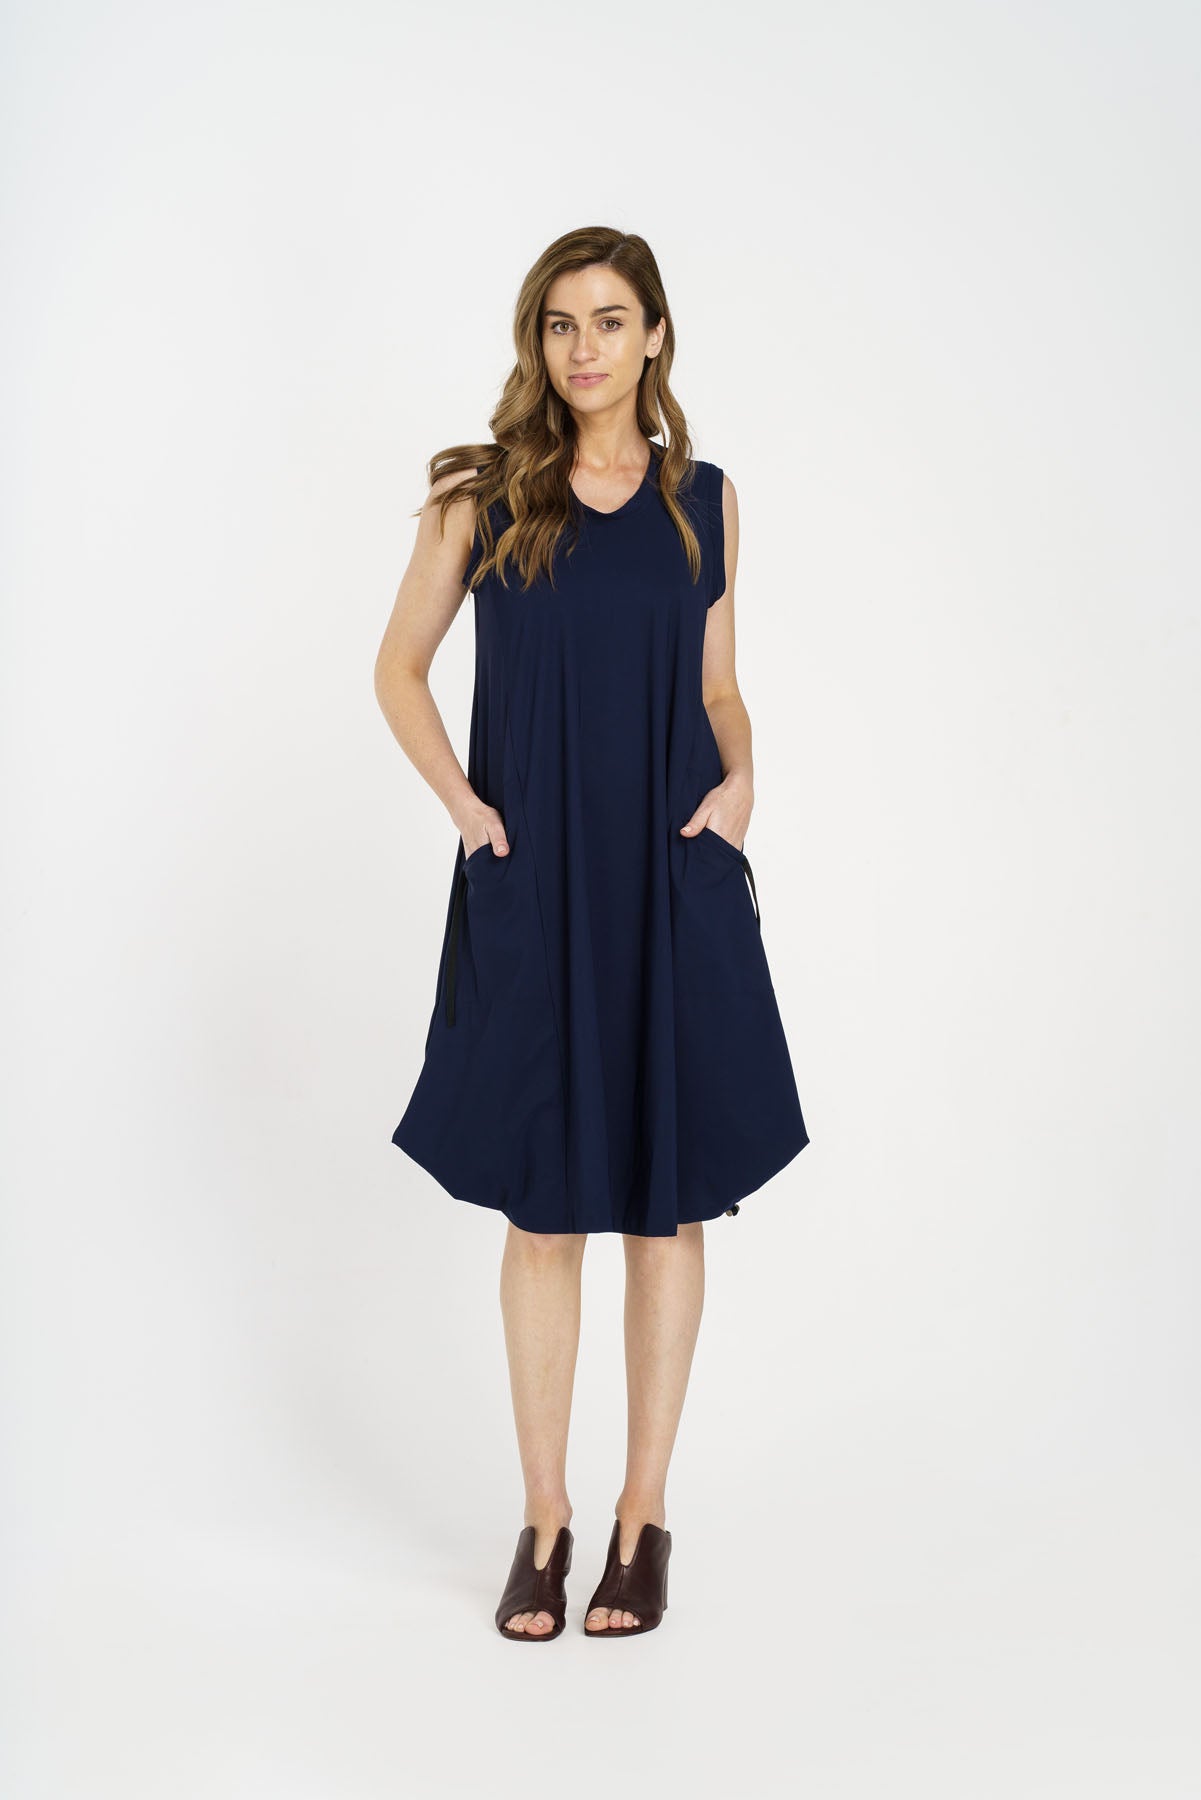 Sleeveless Drawstring Dress - Indigo Jersey 4218